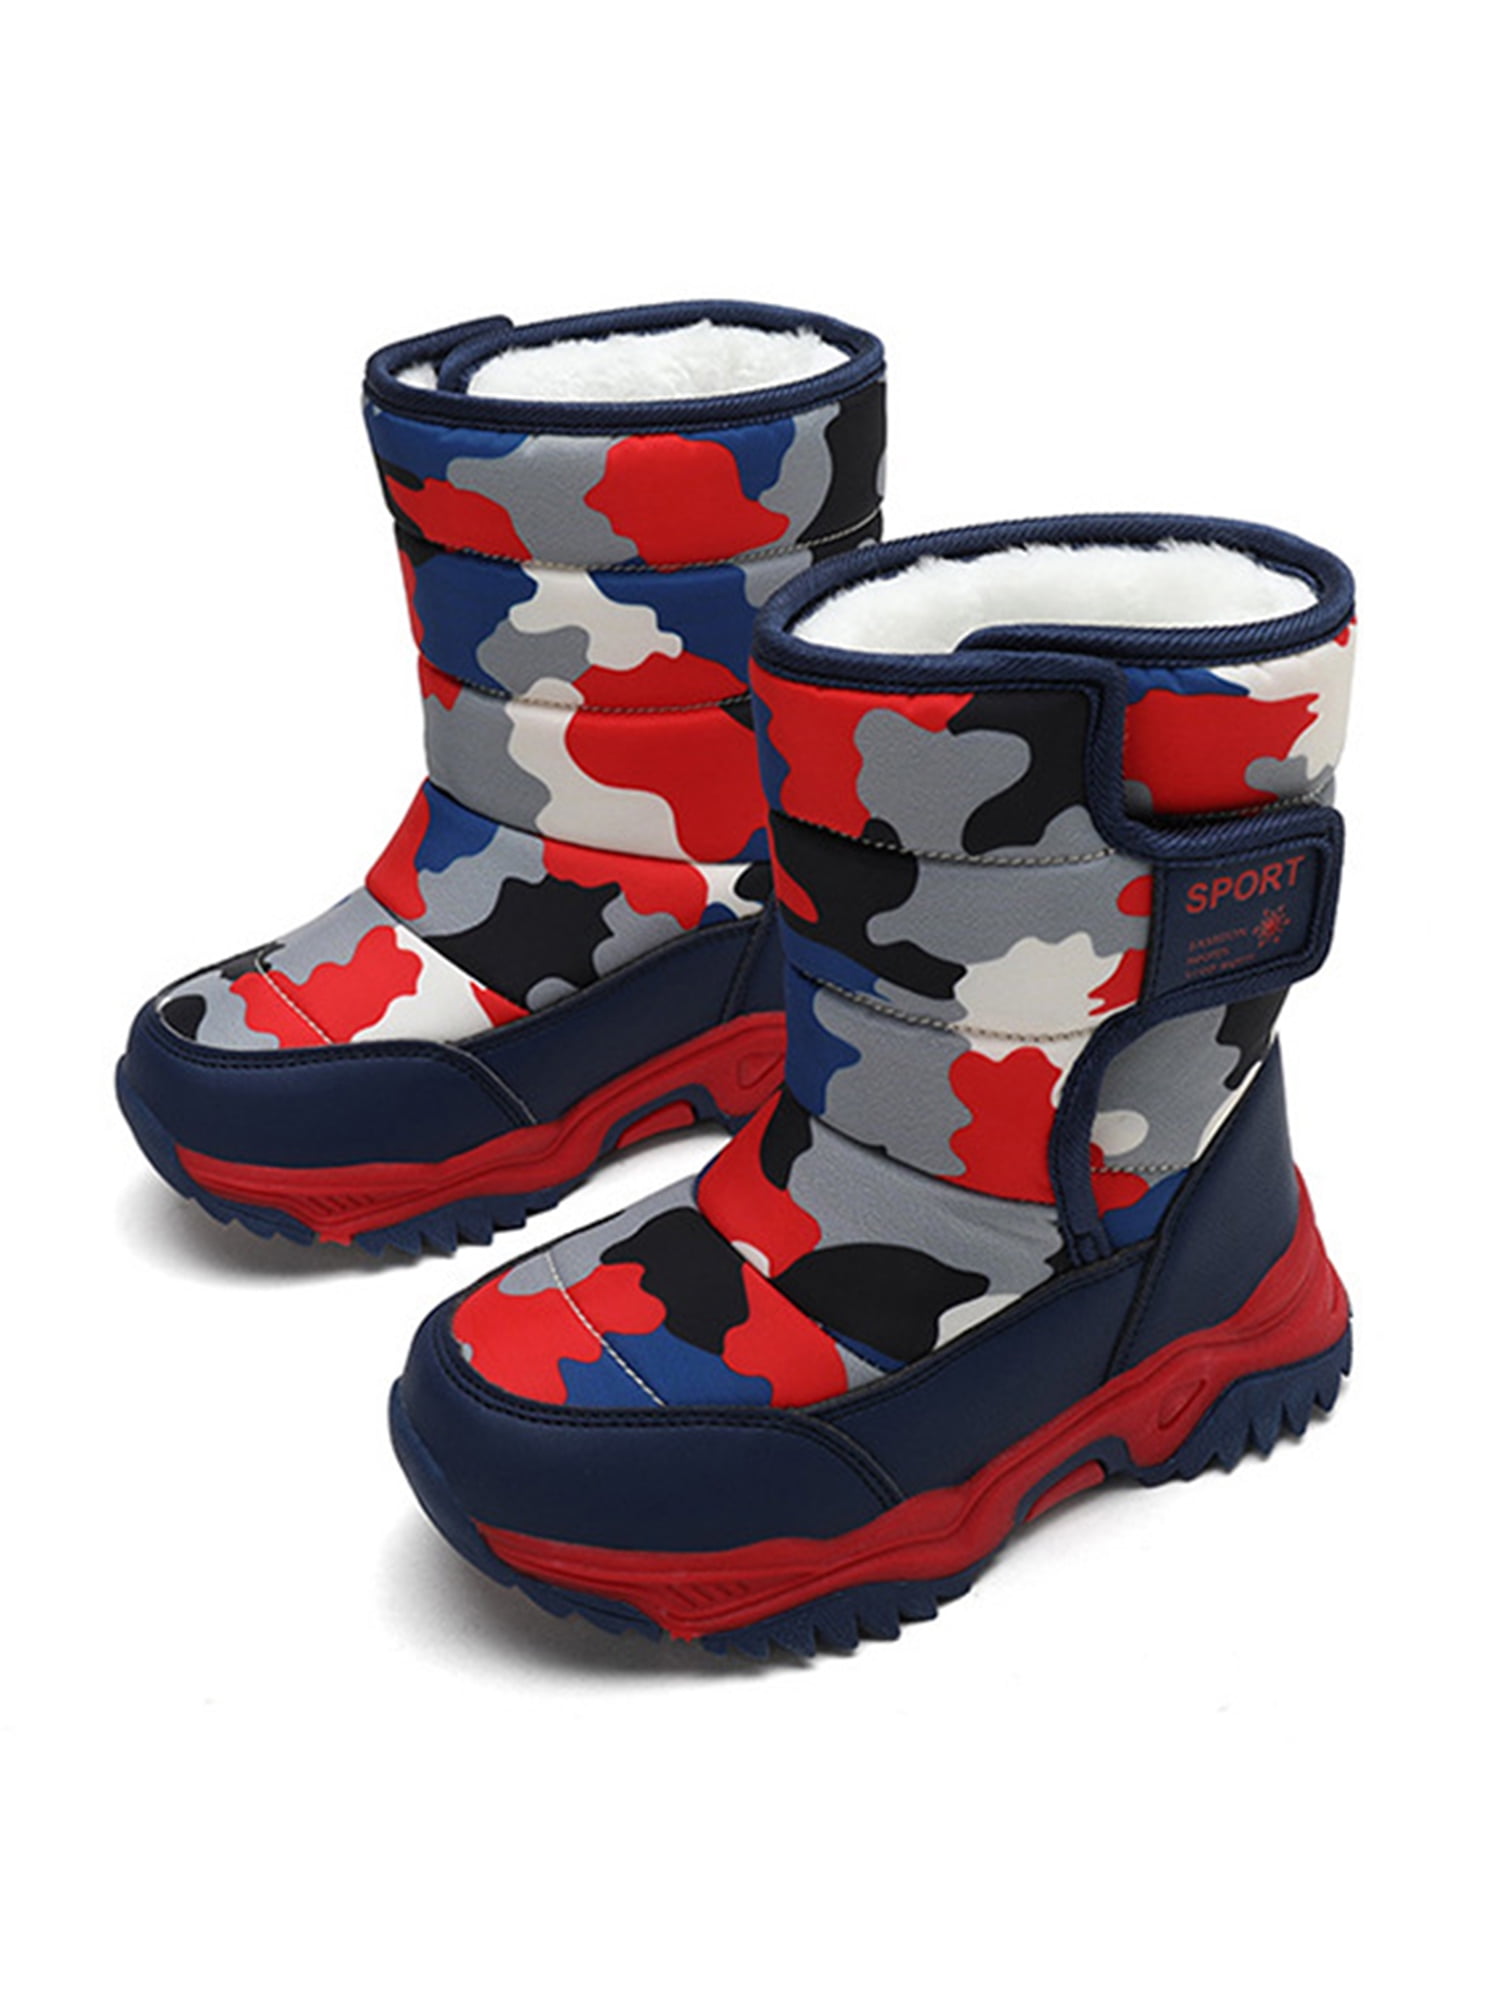 Kids Snow Boots Boys & Girls Winter Boots Lightweight Waterproof Cold Weather Outdoor Boots   Toddler/Little Kid/Big Kid